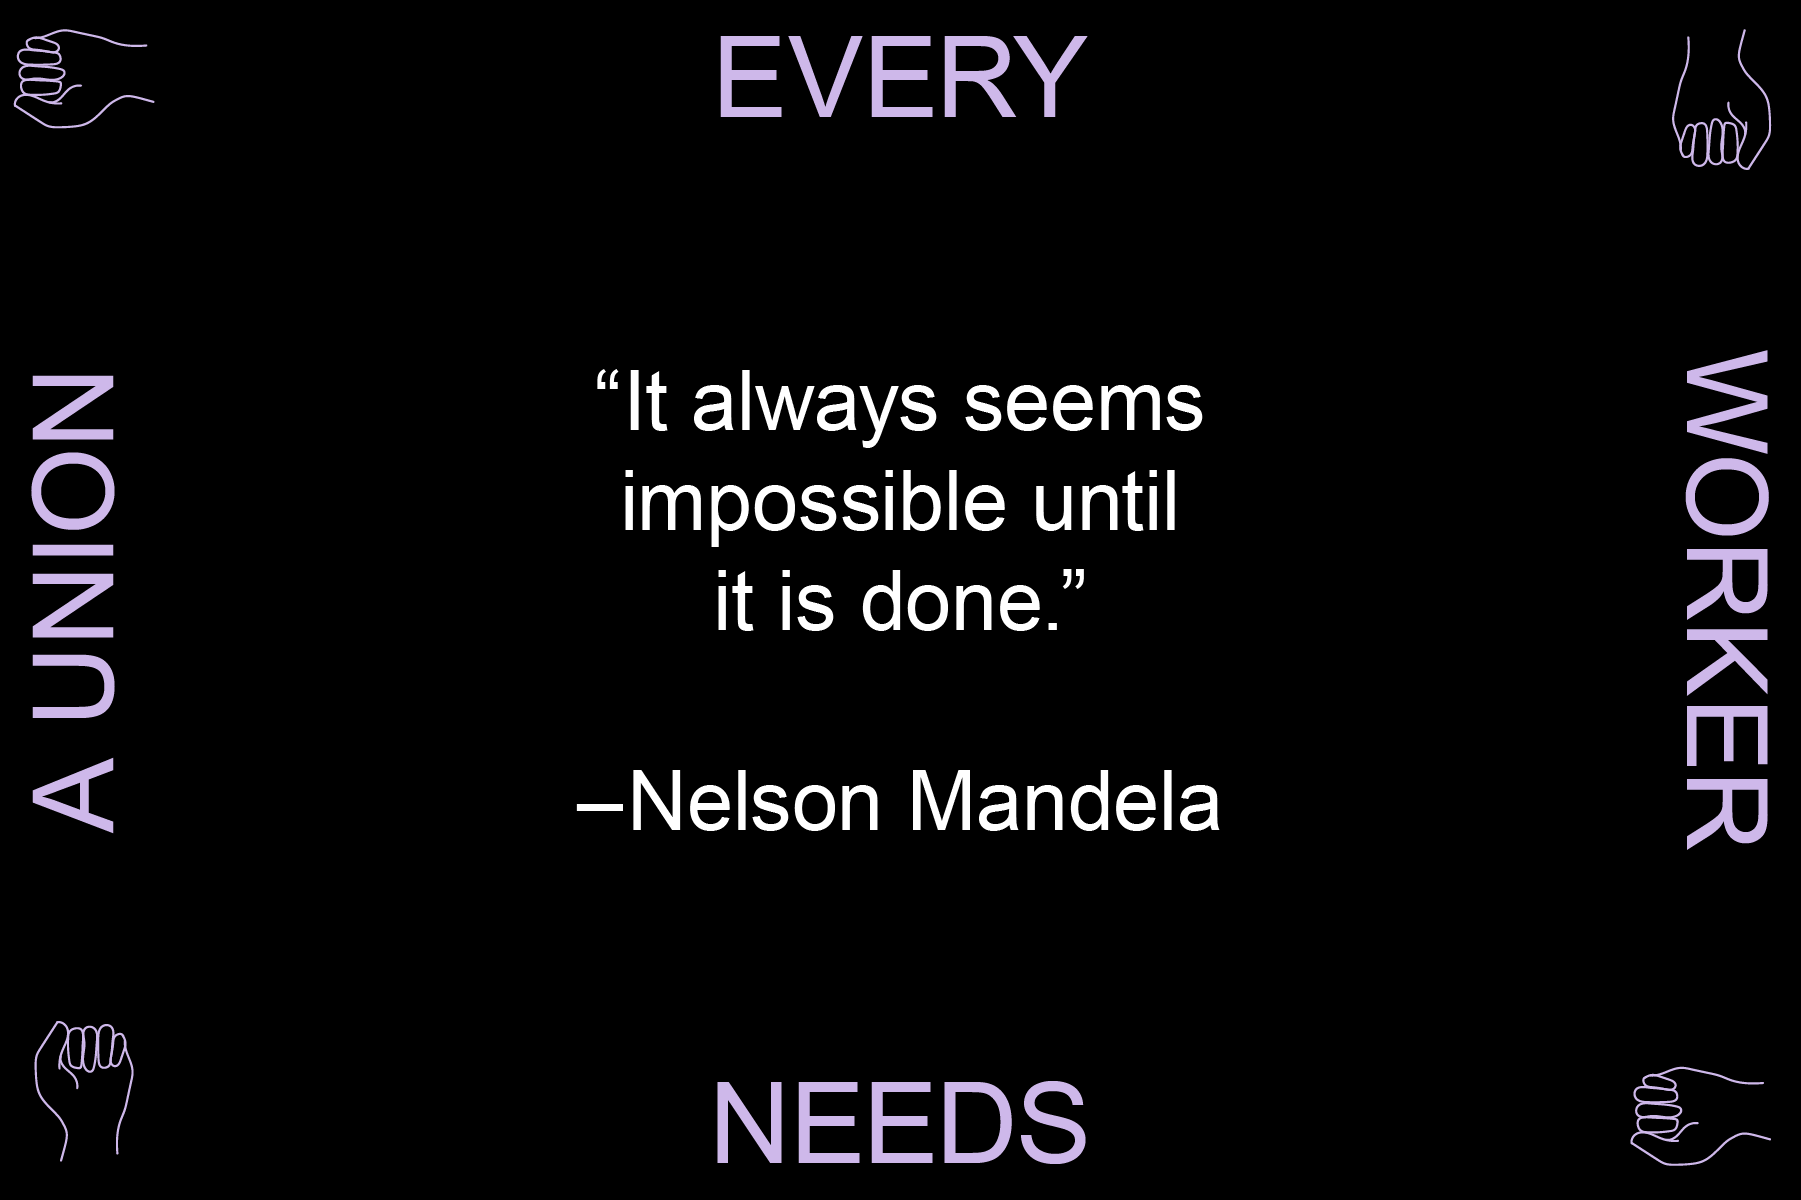 'It always seems impossible until it is done.' - Nelson Mandela